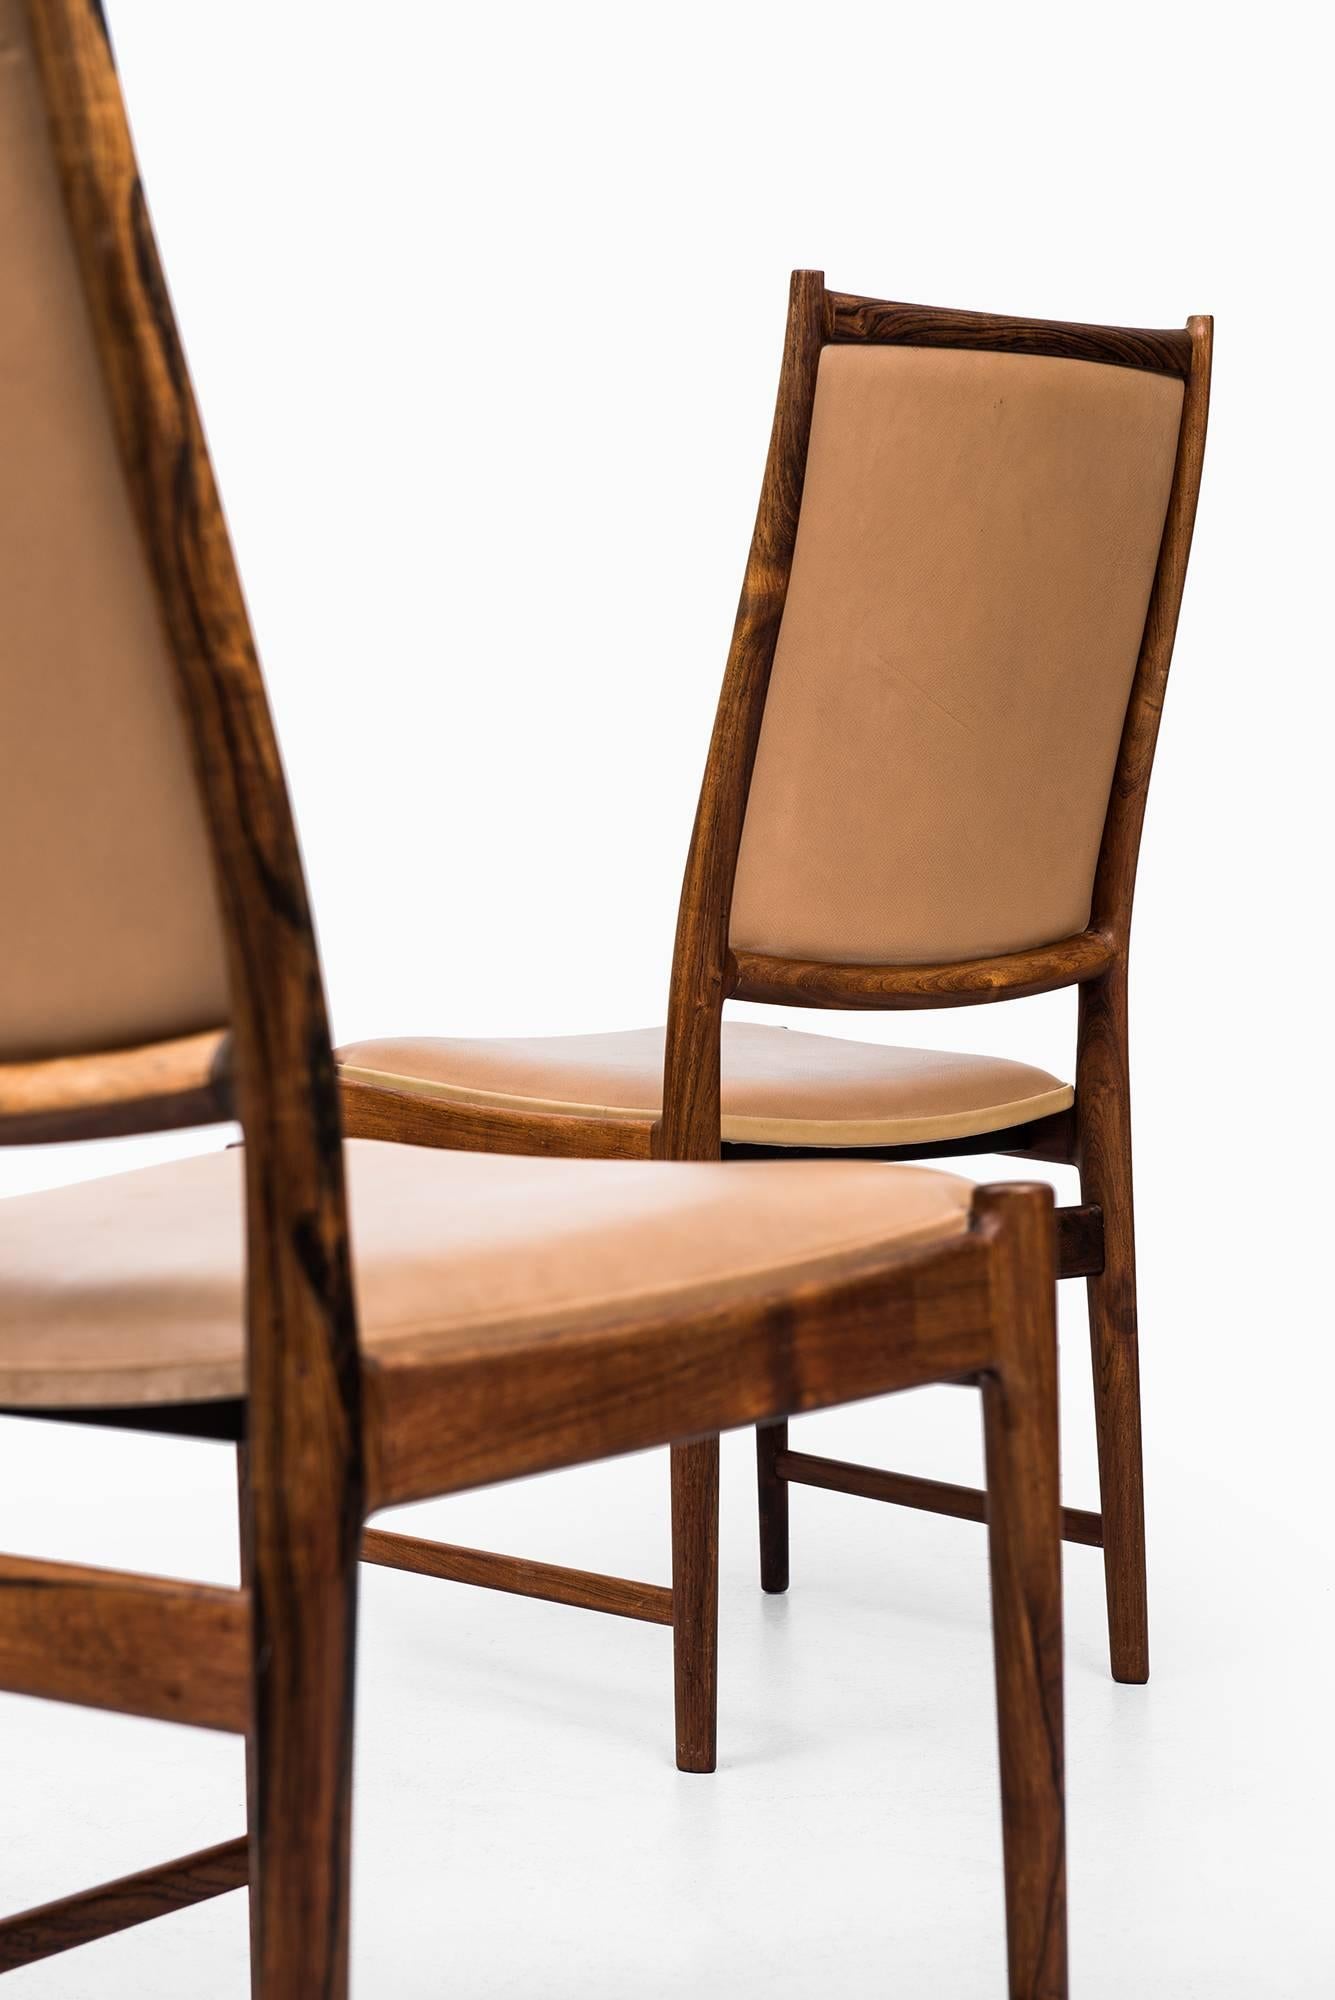 Torbjørn Afdal High Back Dining Chairs Model Darby by Nesjestranda Møbelfabrik For Sale 1